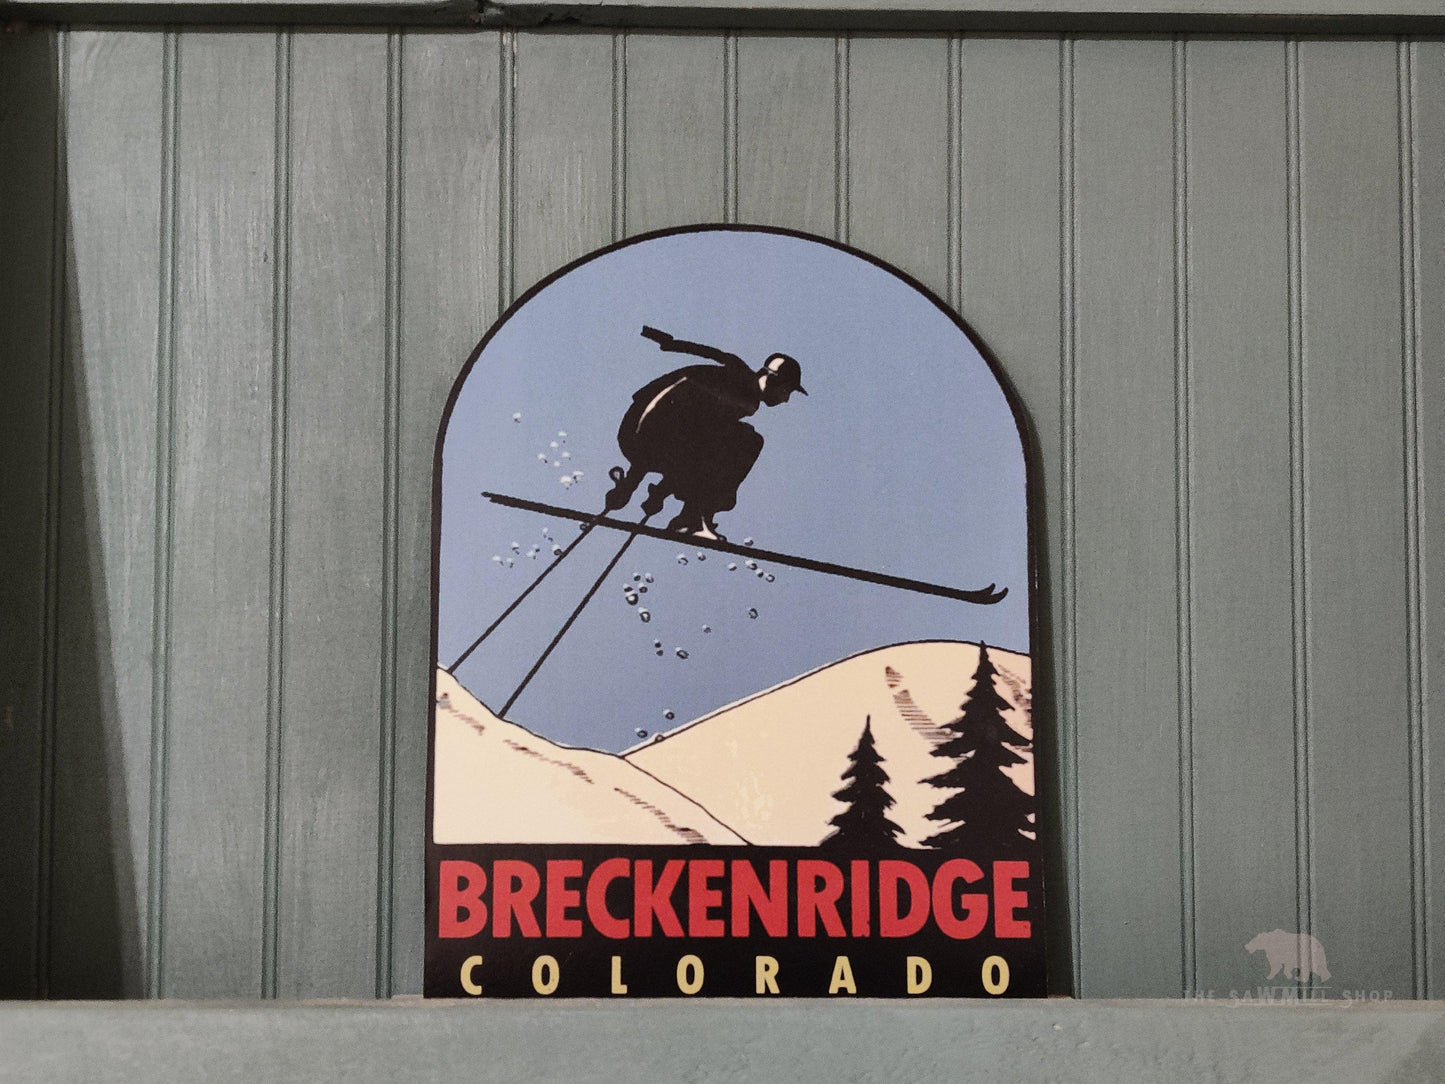 Breckenridge Colorado Ski Slopes Vintage Artwork Wood Cutout-The Sawmill Shop